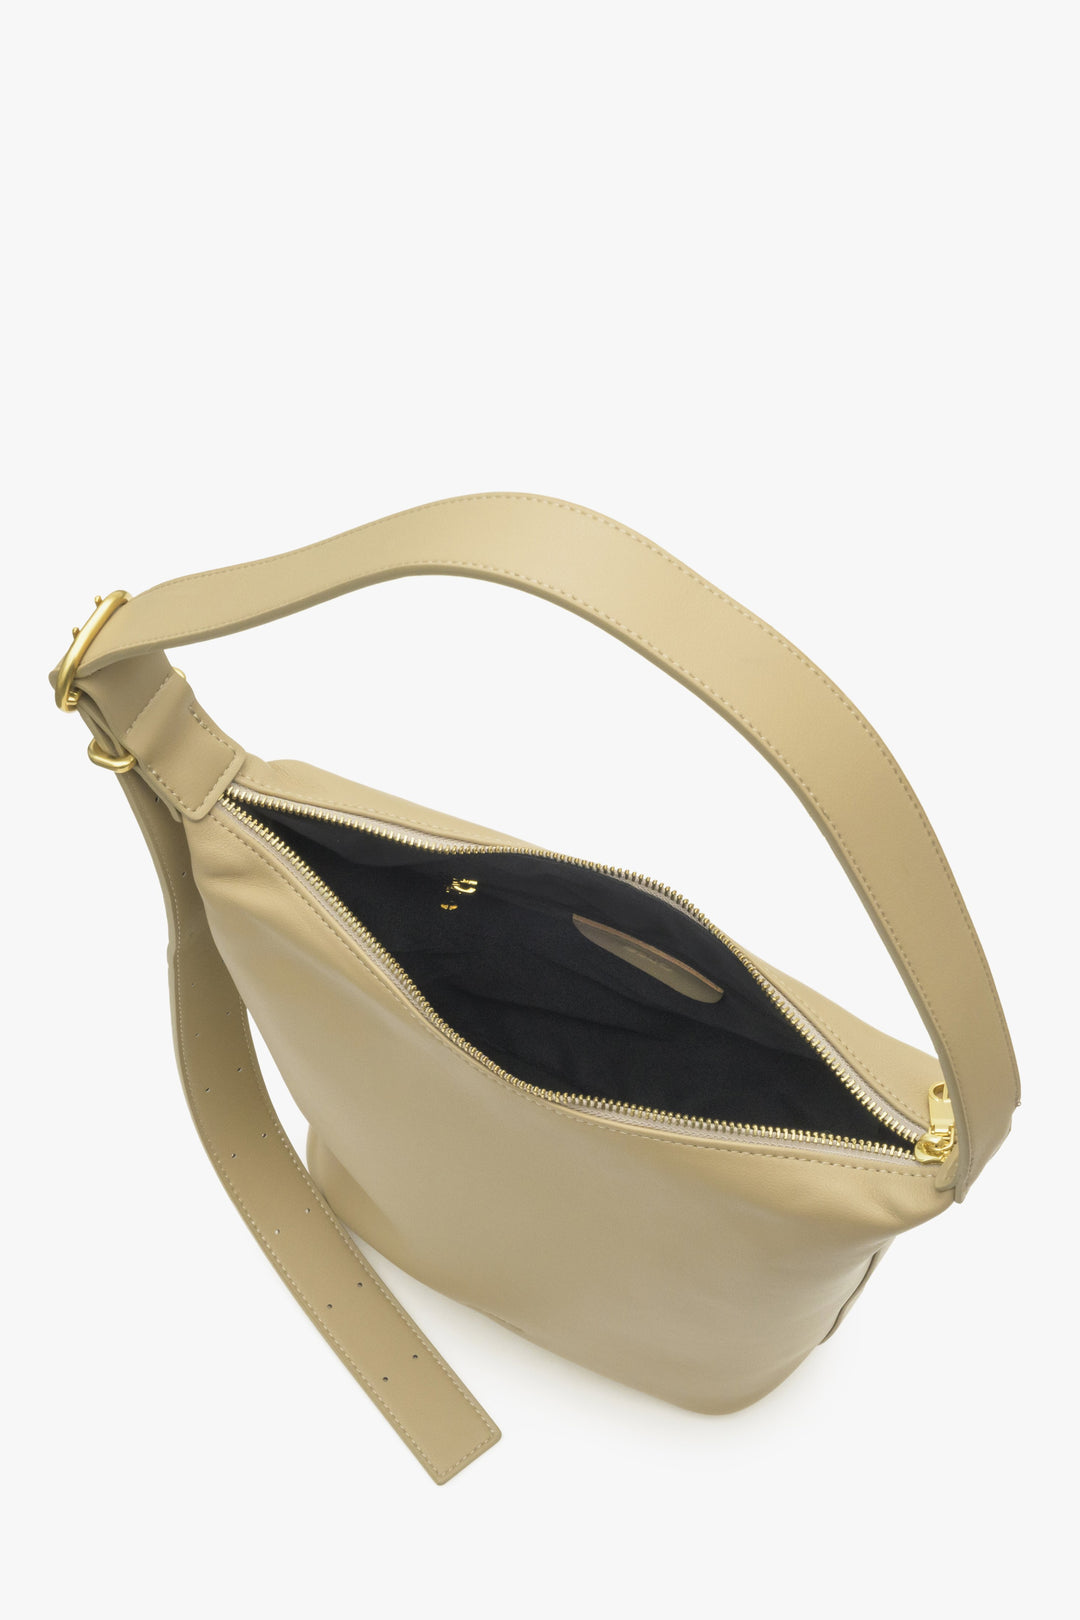 Women's beige leather Estro handbag - close-up on the interior of the model.